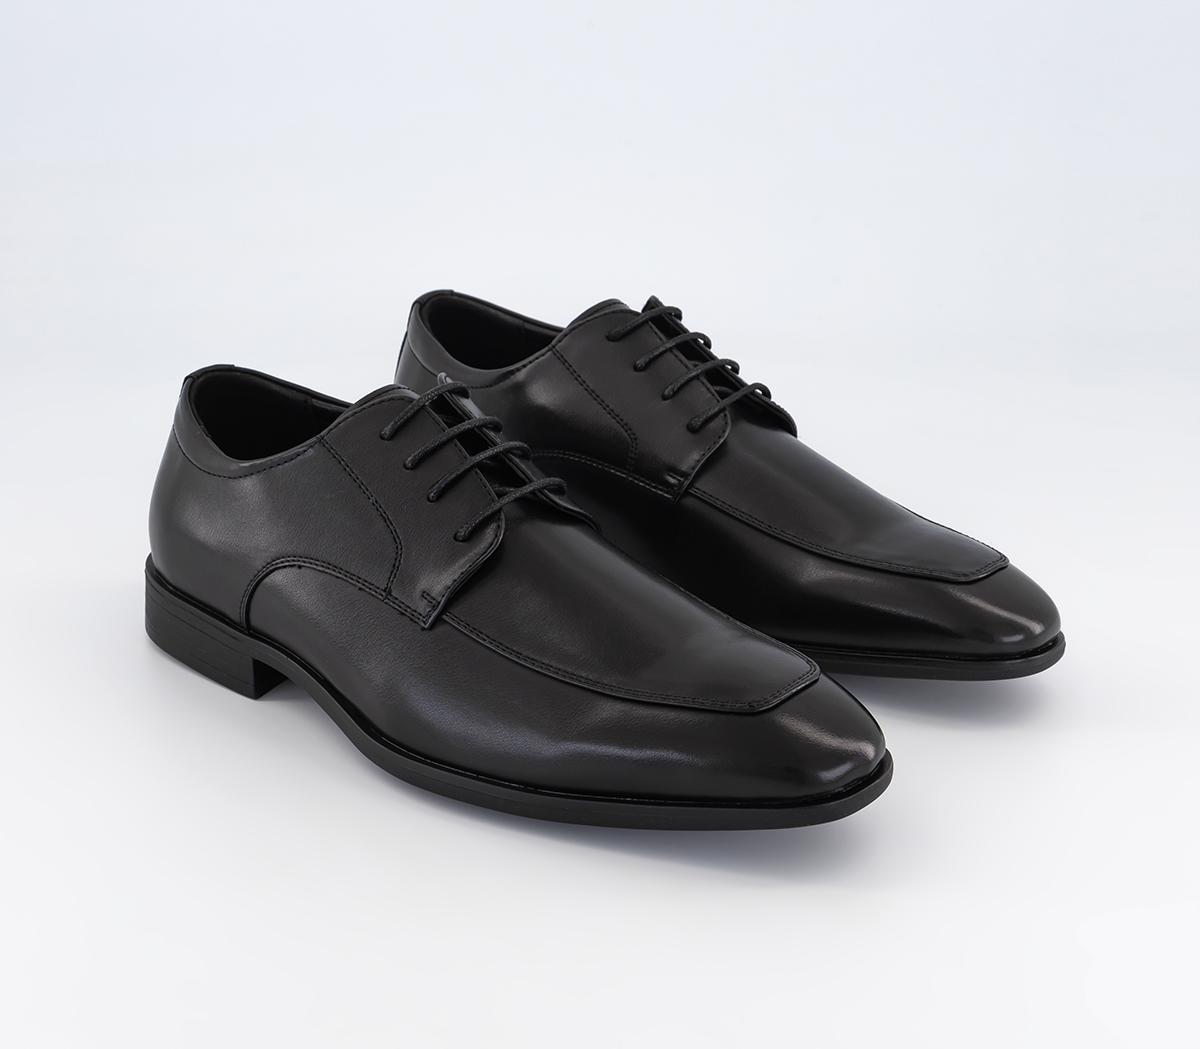 OFFICE Mens Mclean Stitched Apron Derby Shoes Black, 9